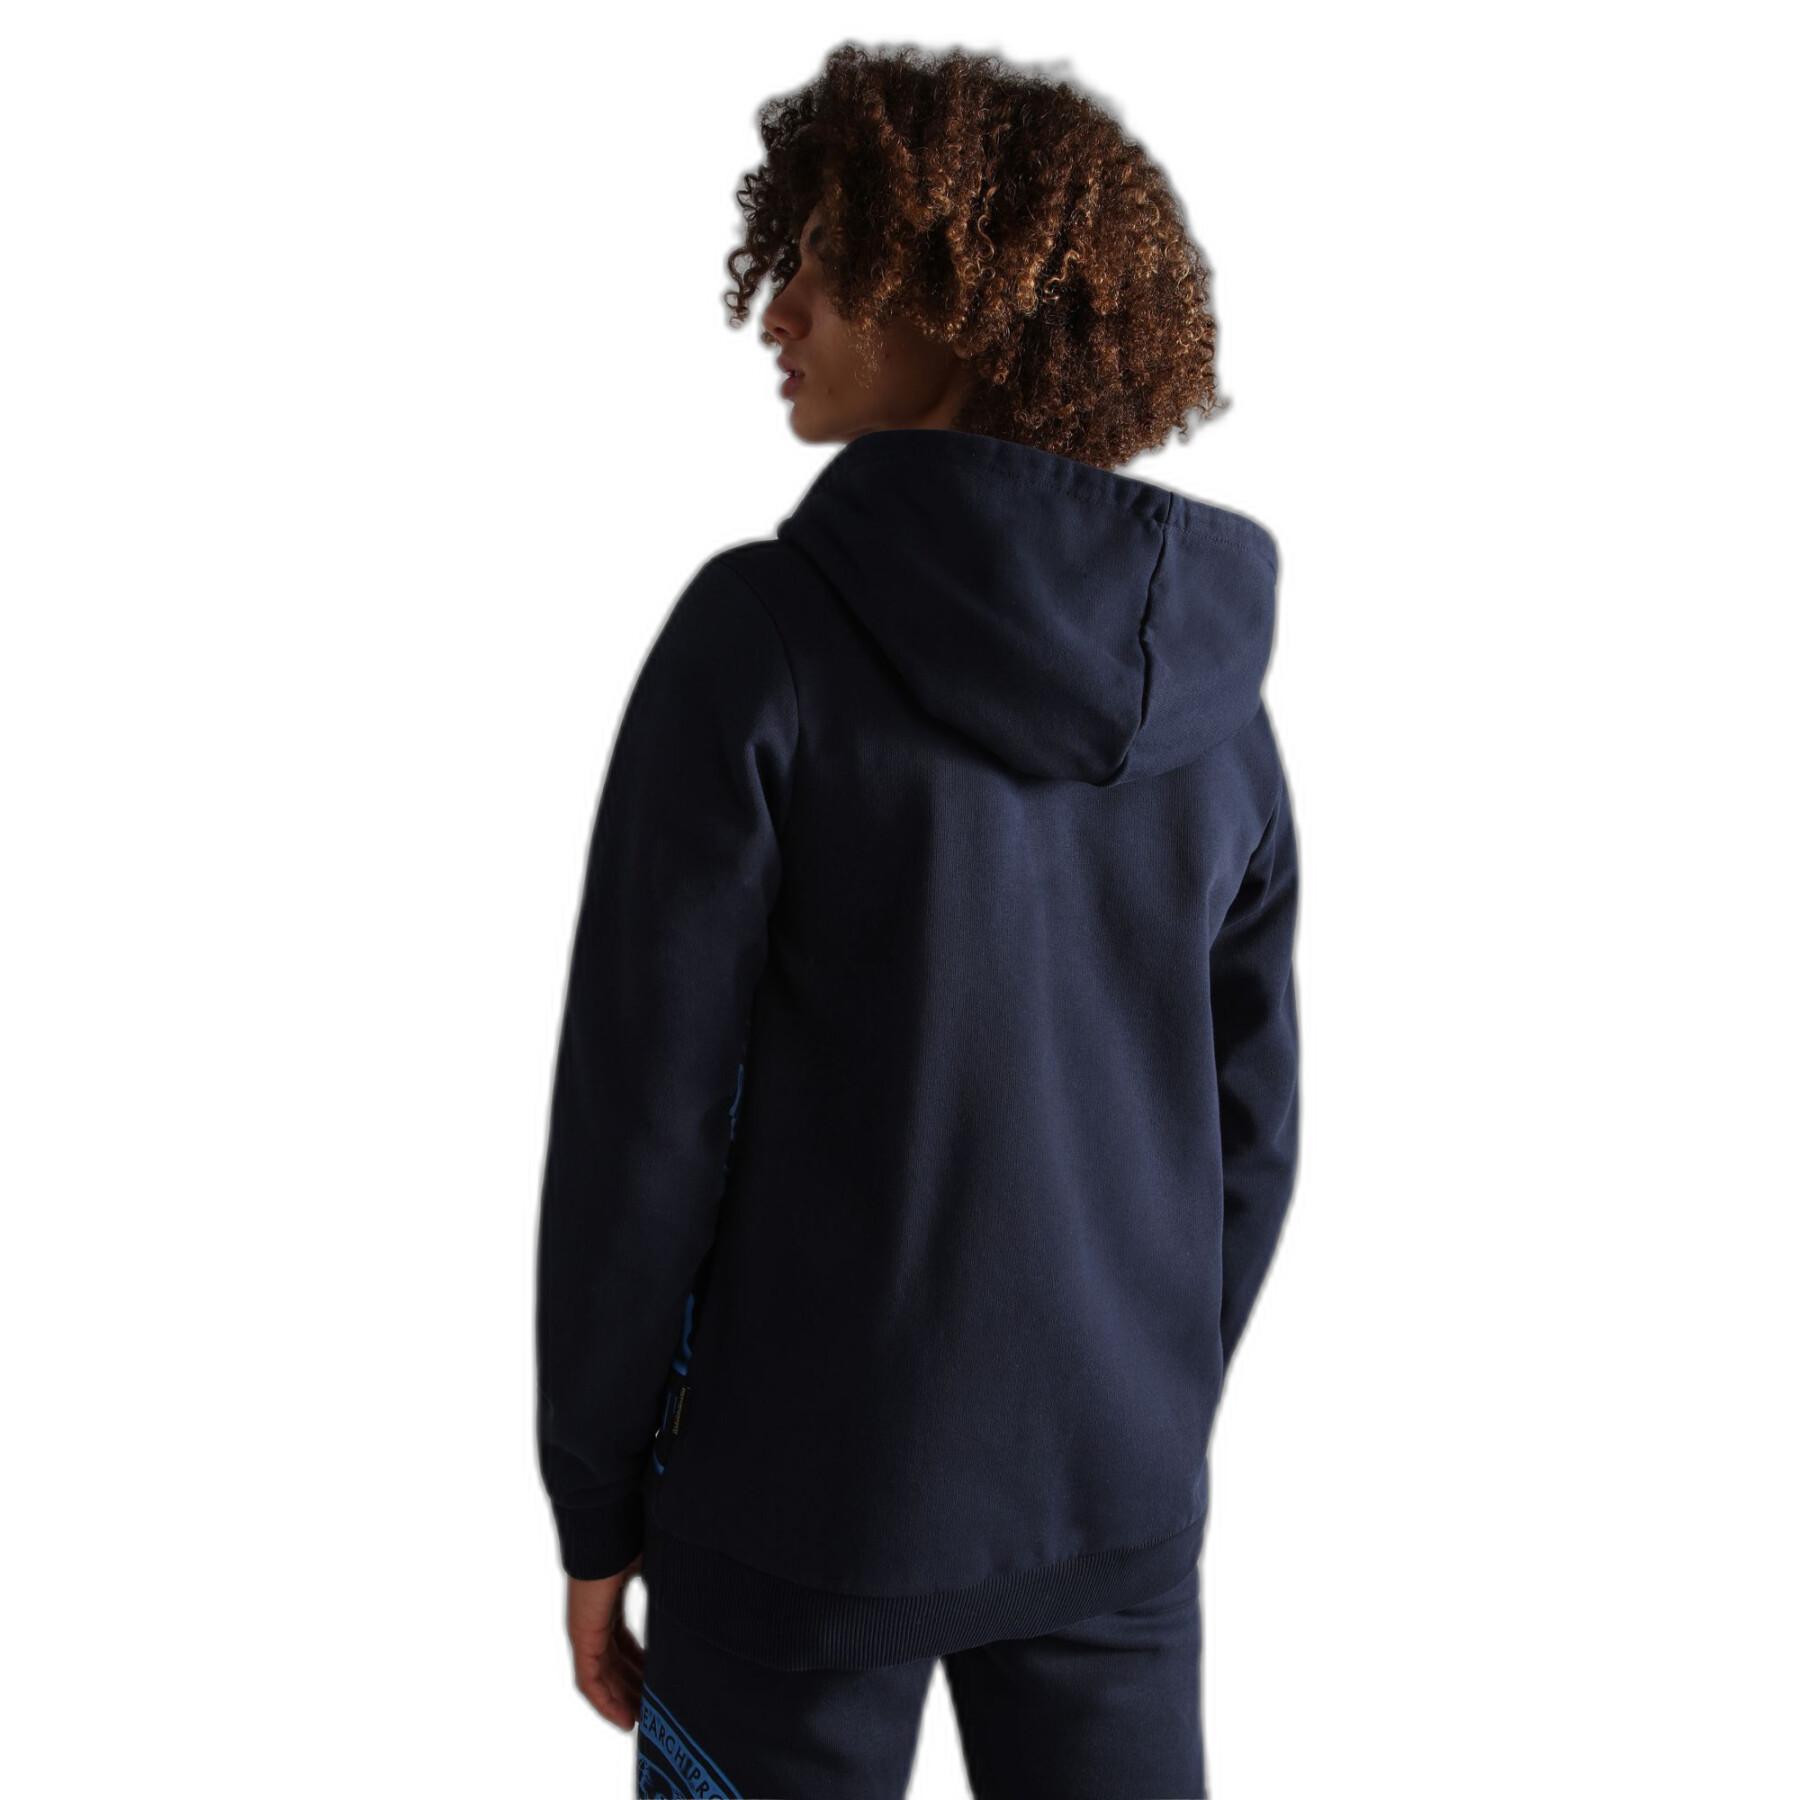 Sweatshirt full zip hooded child Napapijri B-Boreale